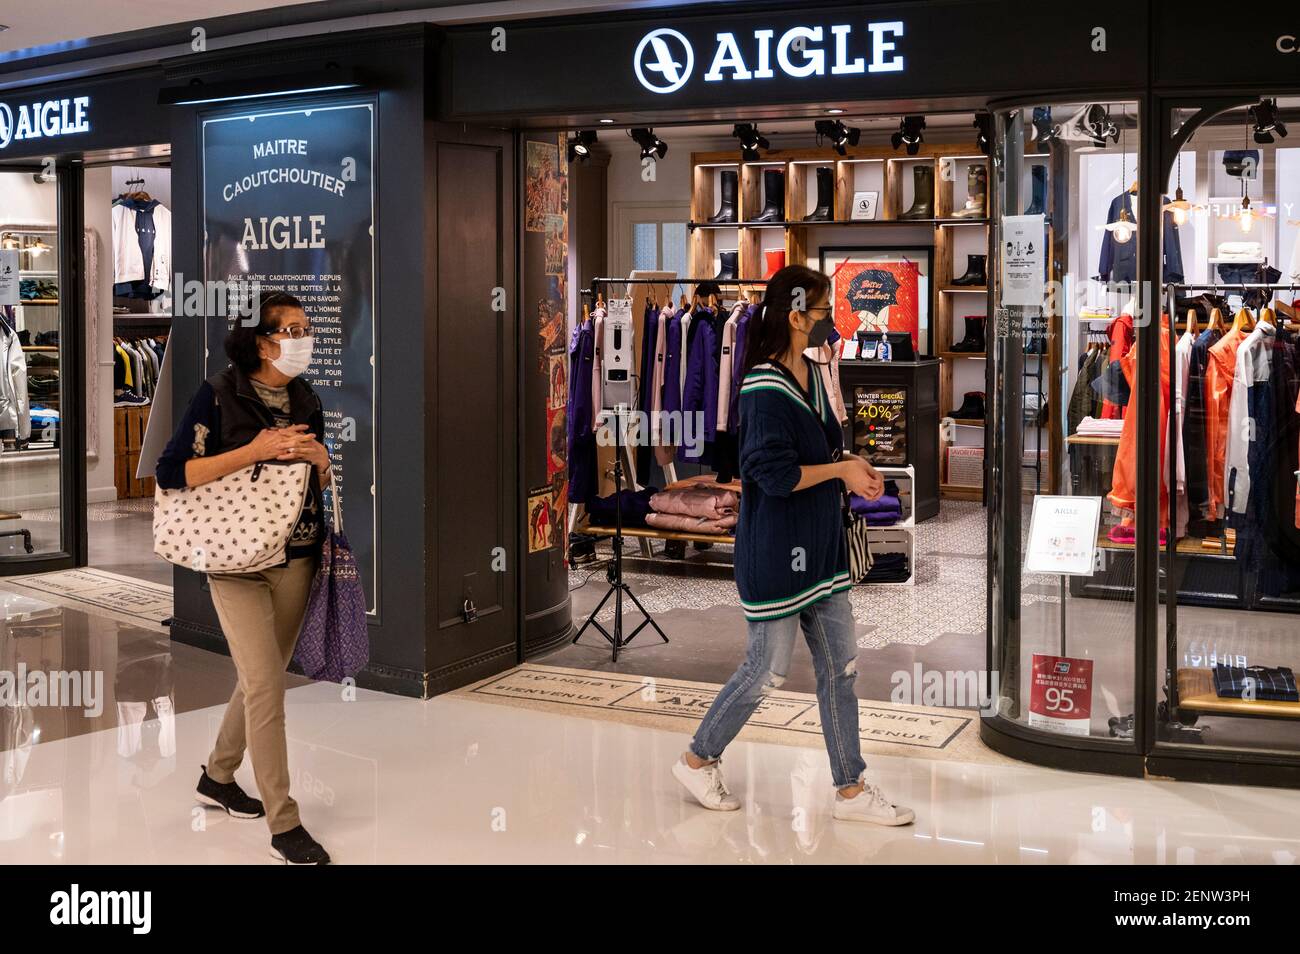 fashion brand, Aigle store seen Hong Kong Photo -